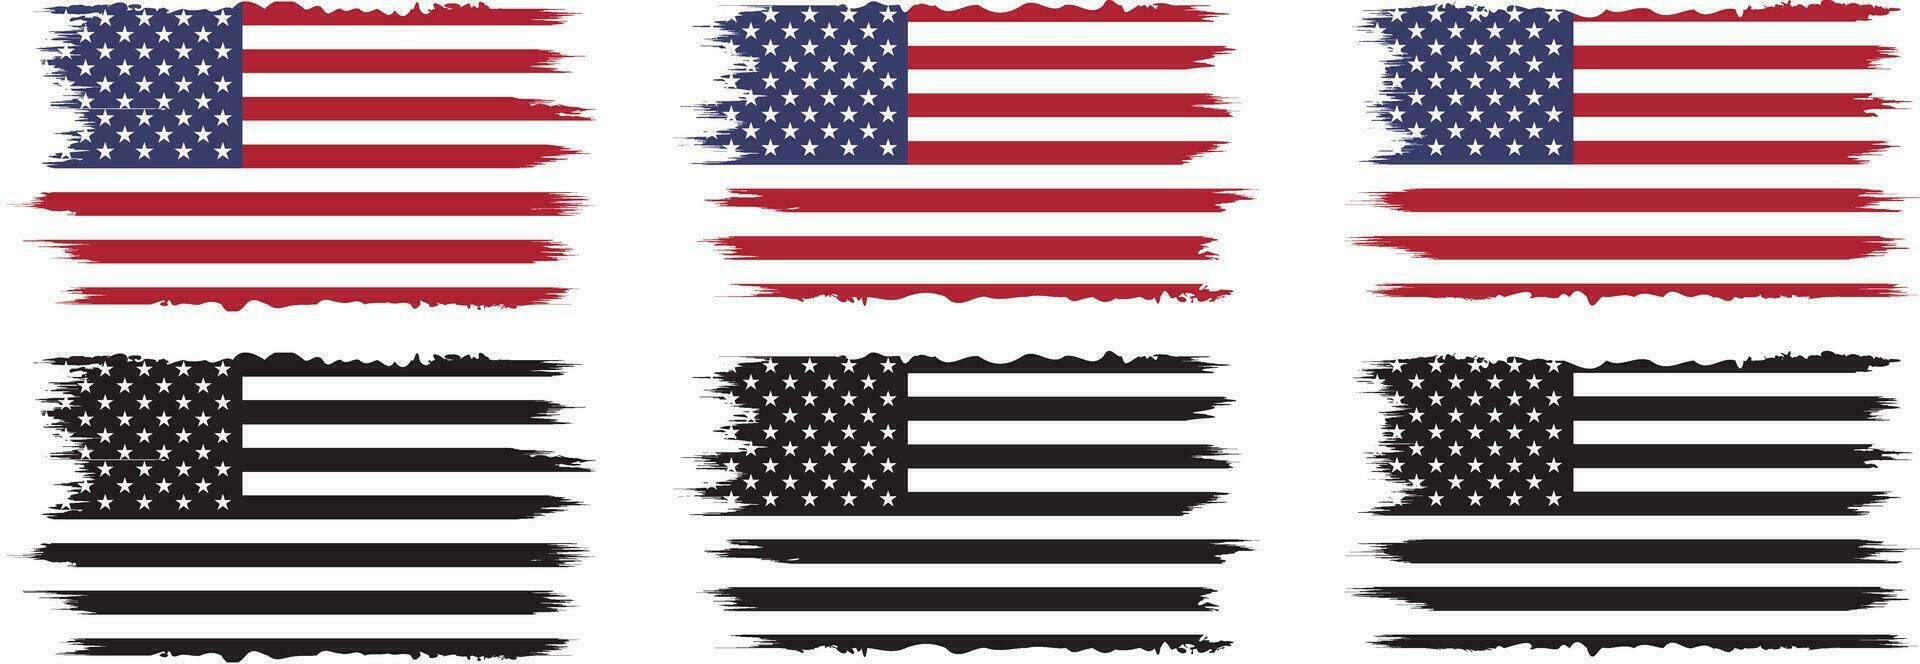 amerikanisch Flagge Silhouette, Grunge USA Flagge einstellen Vektor, Grunge, Flagge, Silhouette, Unabhängigkeit, Juli, 4 .. von Juli, 4 .. Juli, Flagge Silhouette vektor